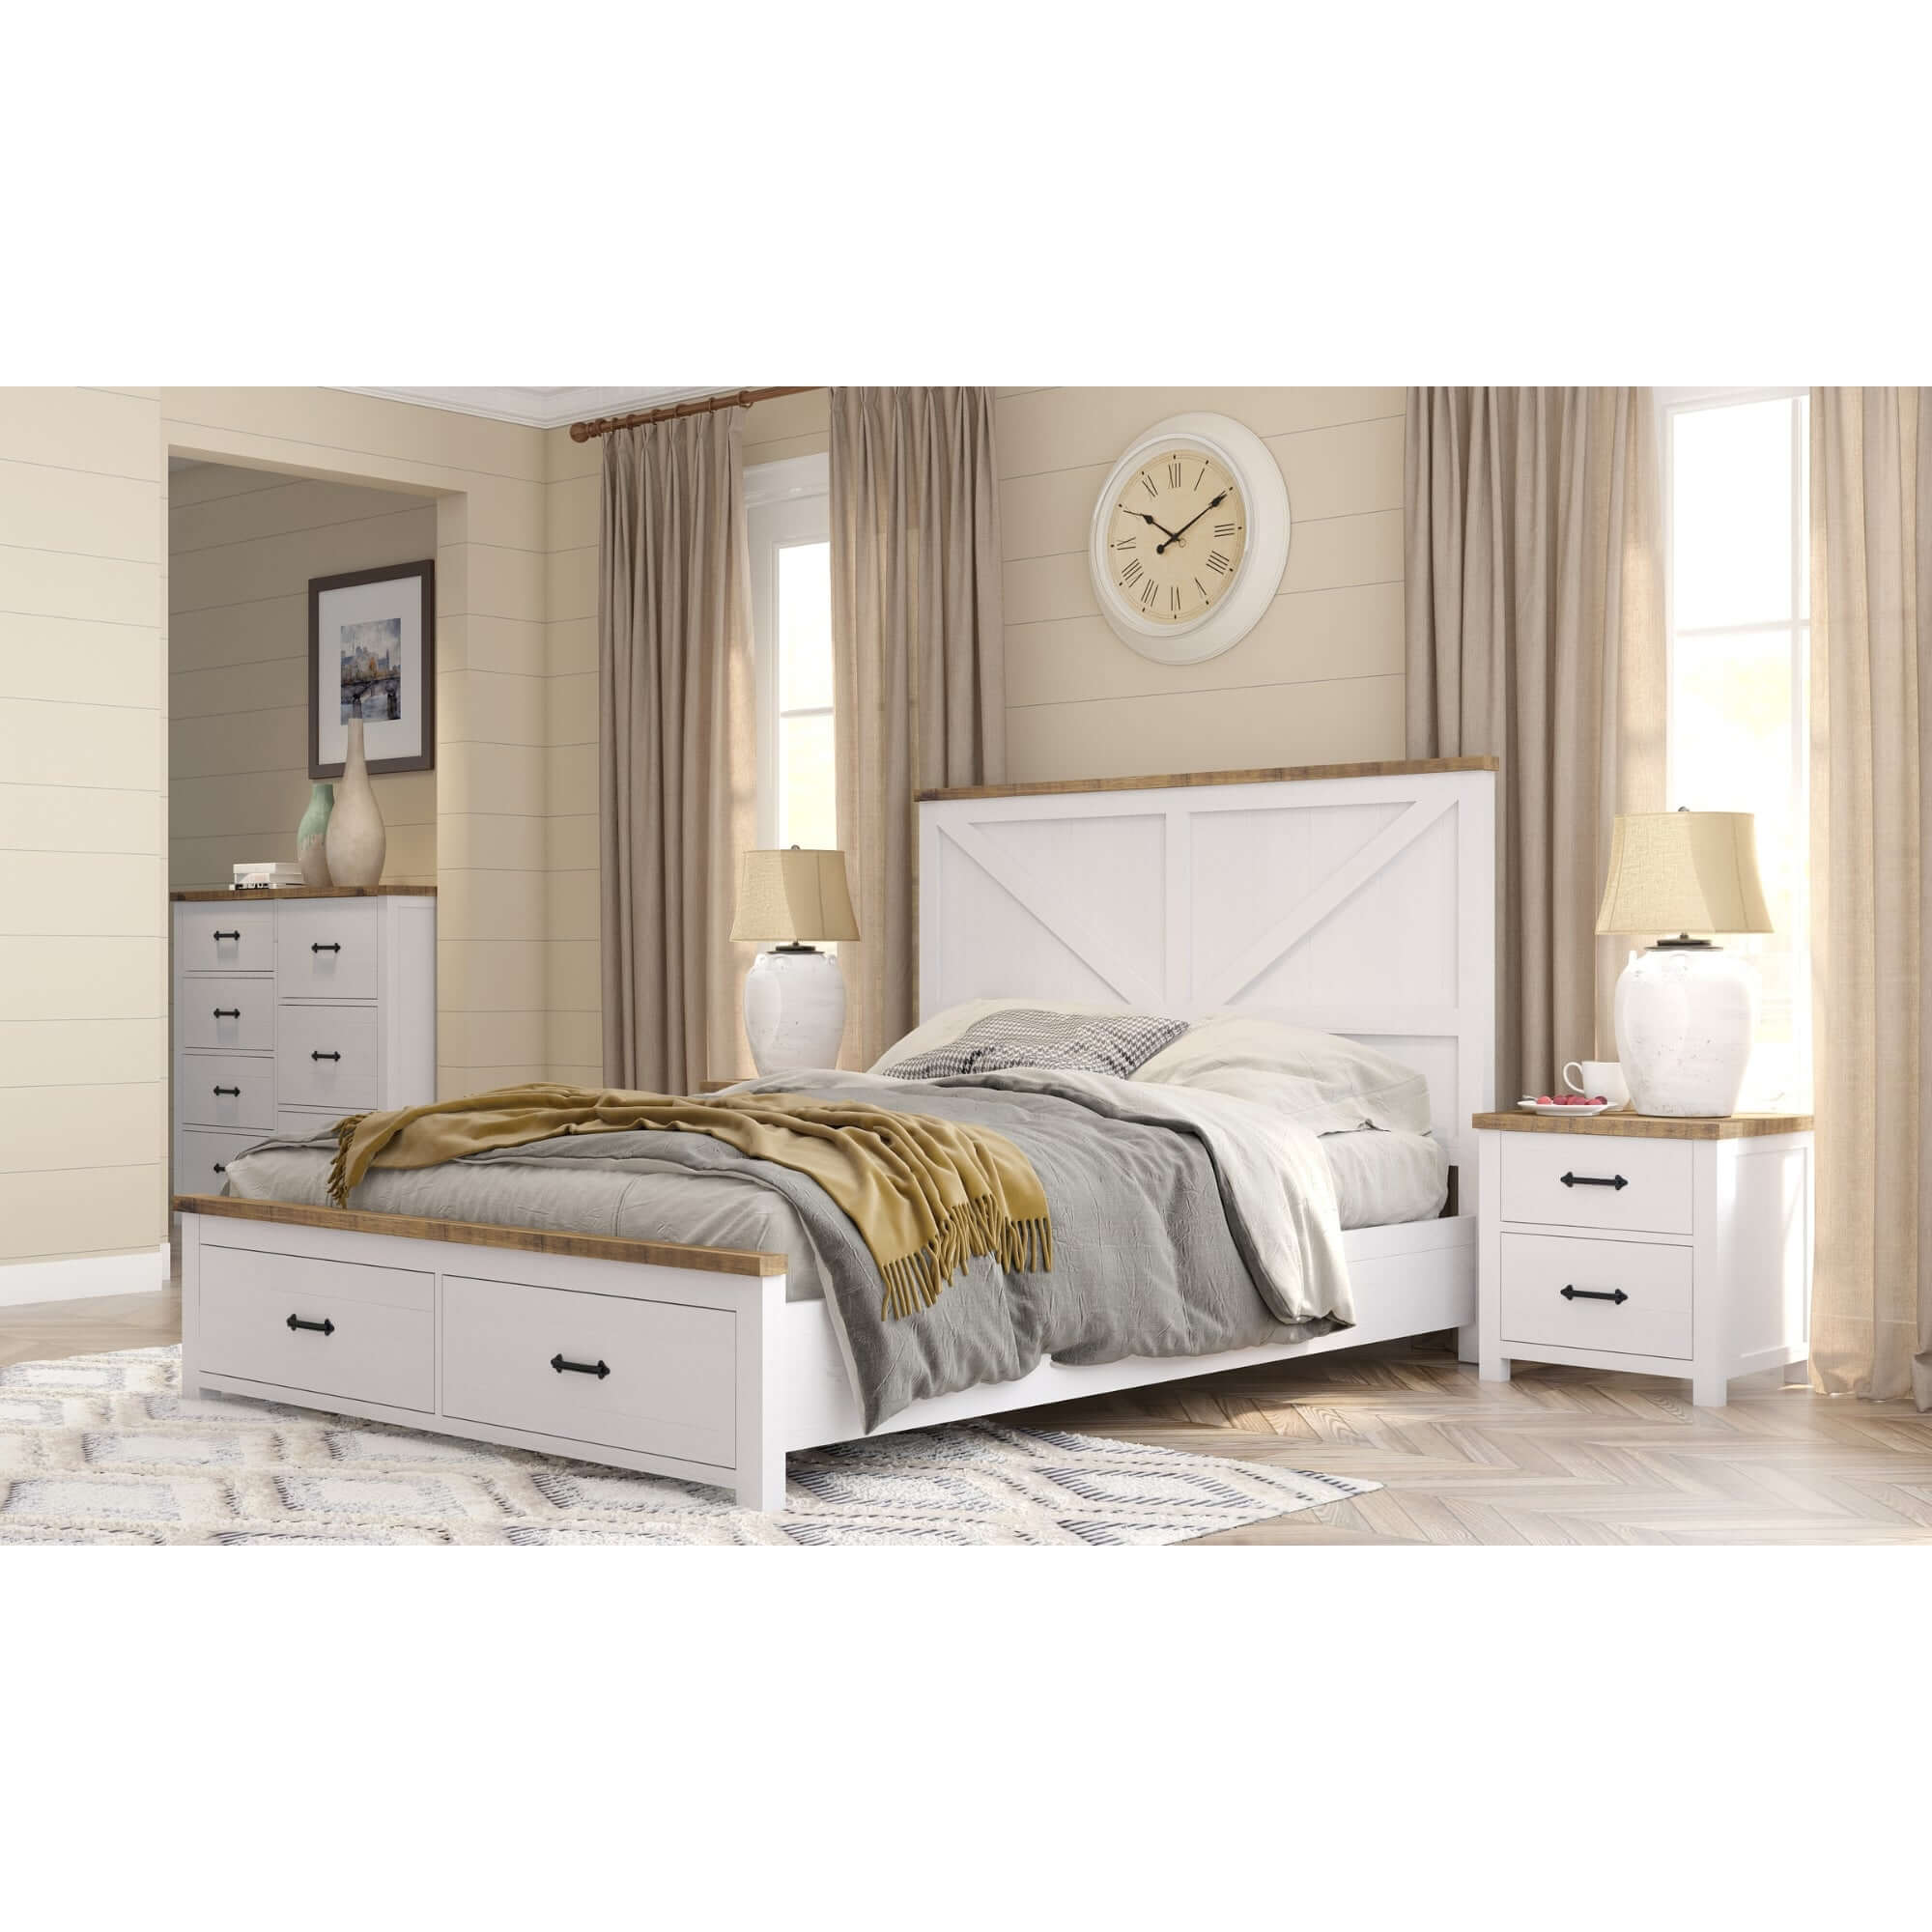 Grandy 4pc King Bedroom Furniture Set - White/Brown-Upinteriors